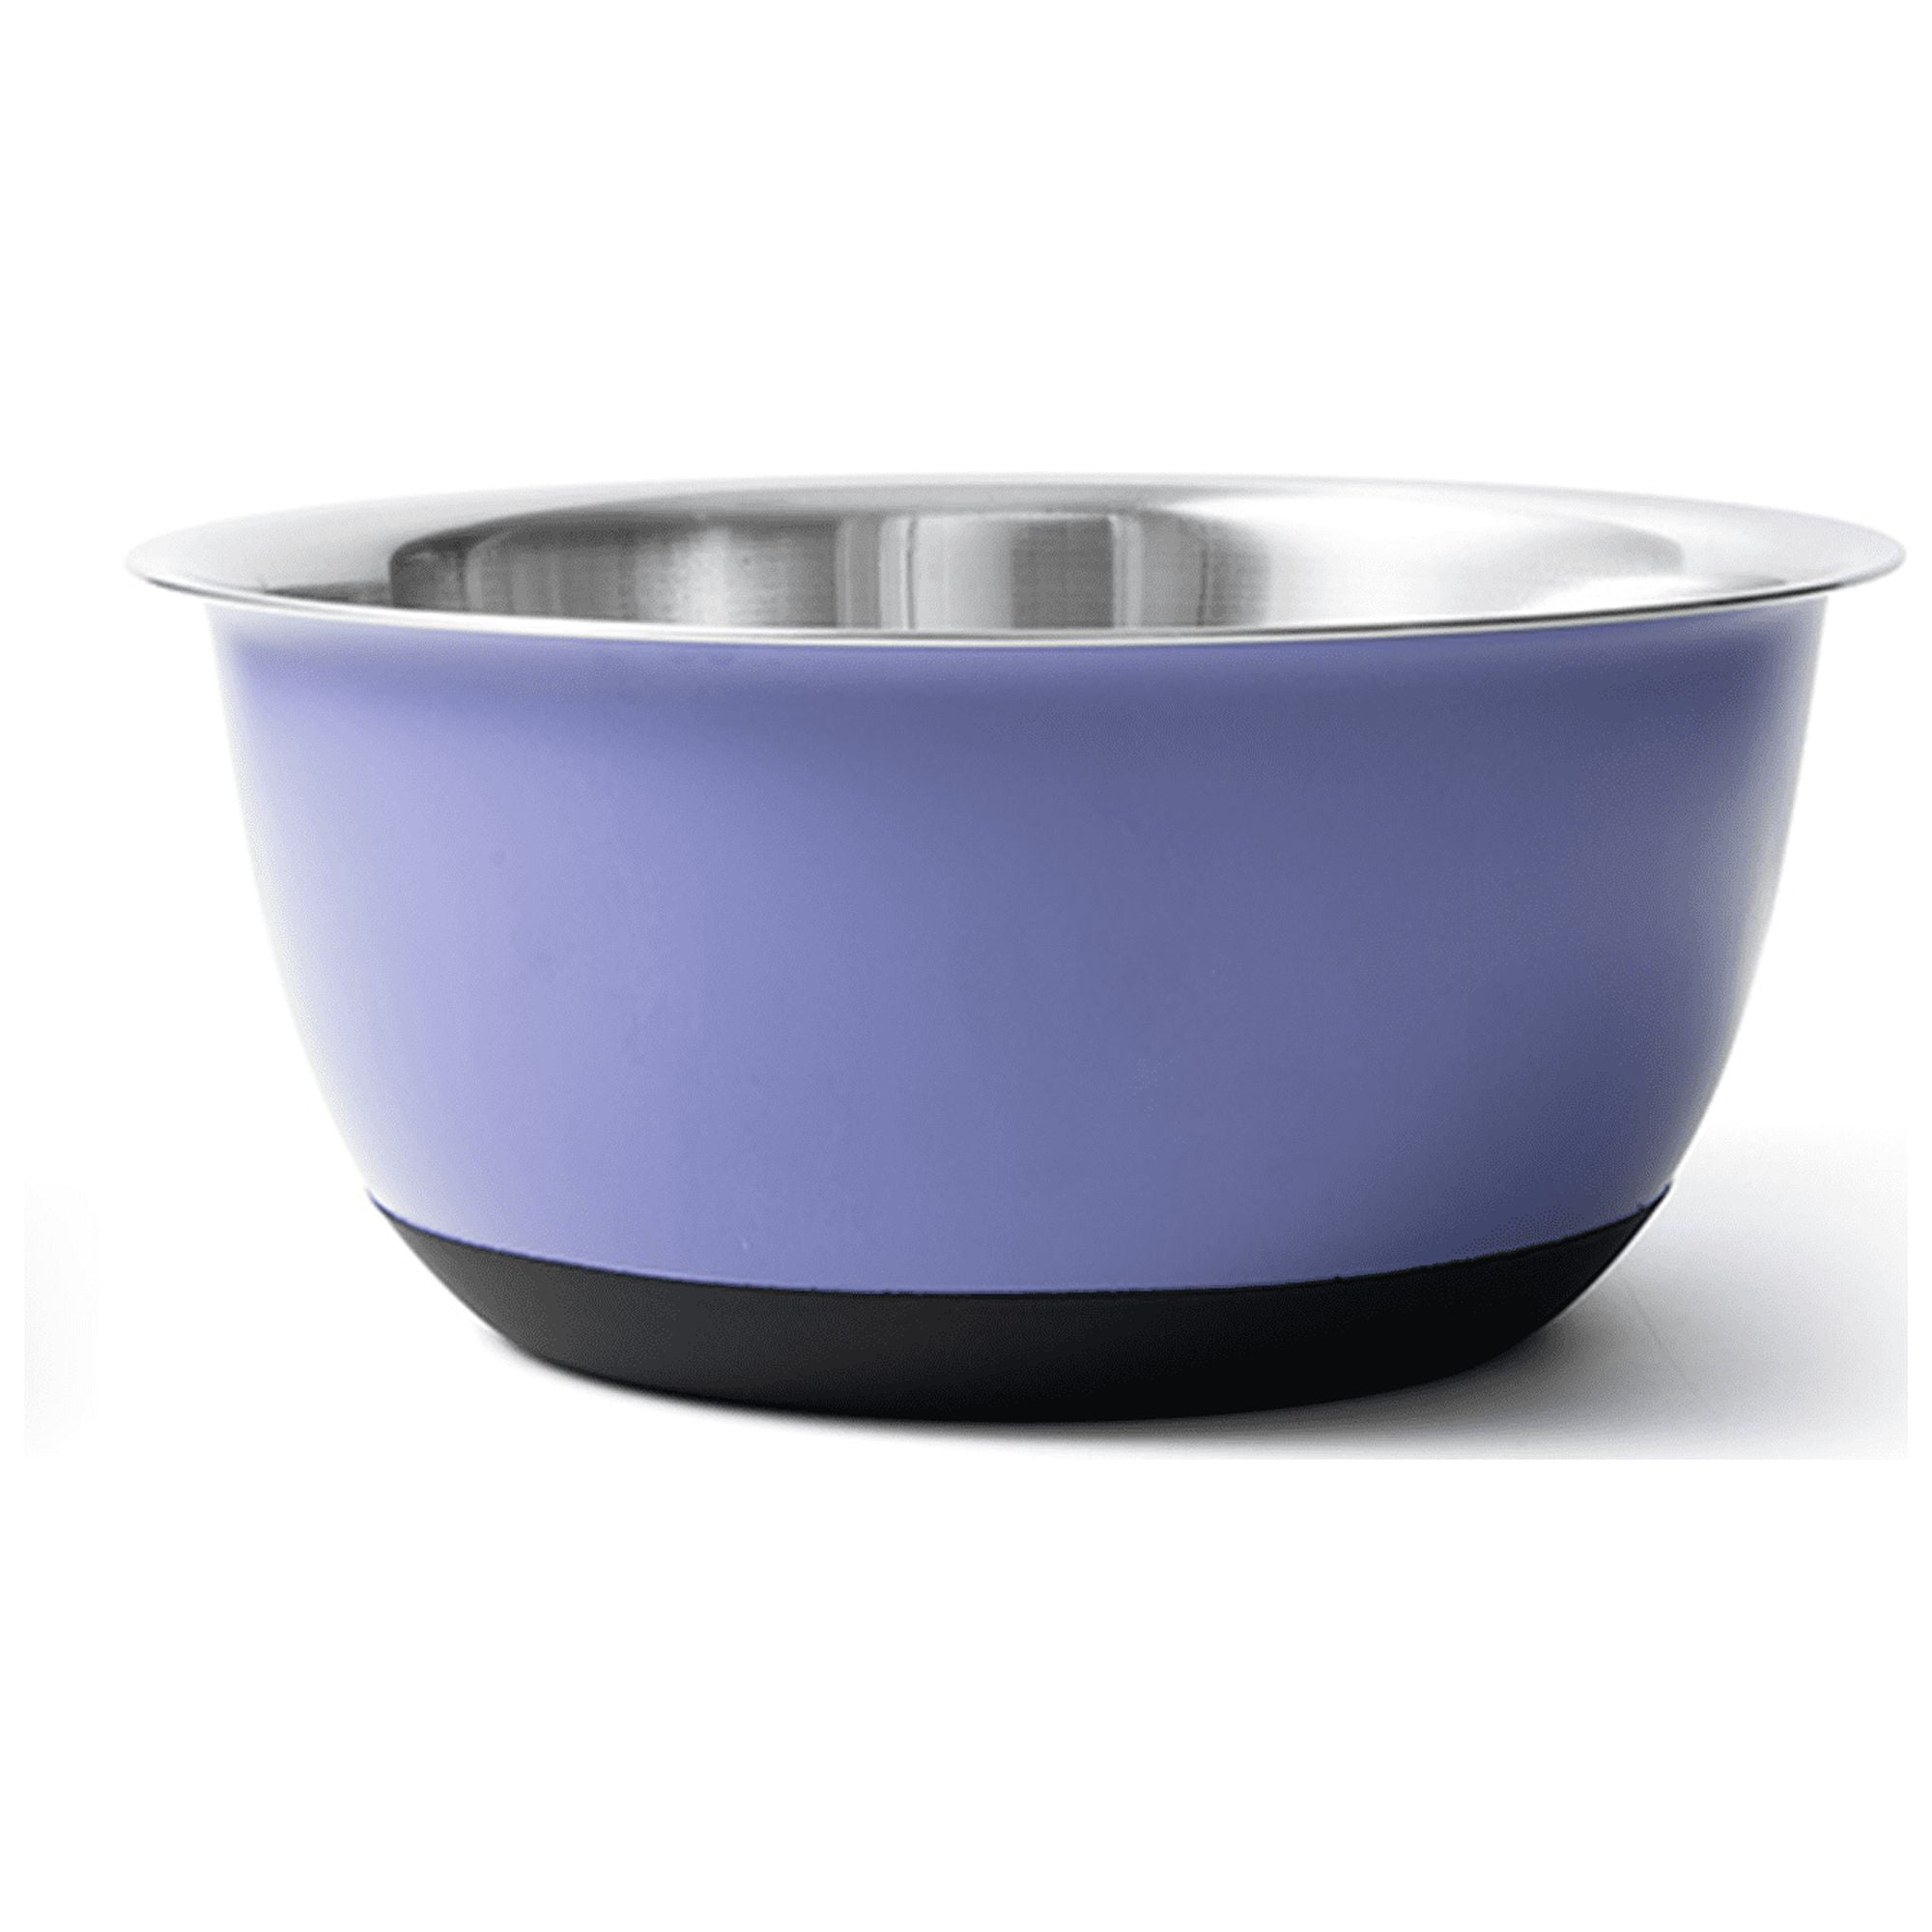  Anchor Hocking Batter Bowl, 2 Quart Glass Mixing Bowl,  Non-Lidded: Mixing Bowls: Home & Kitchen